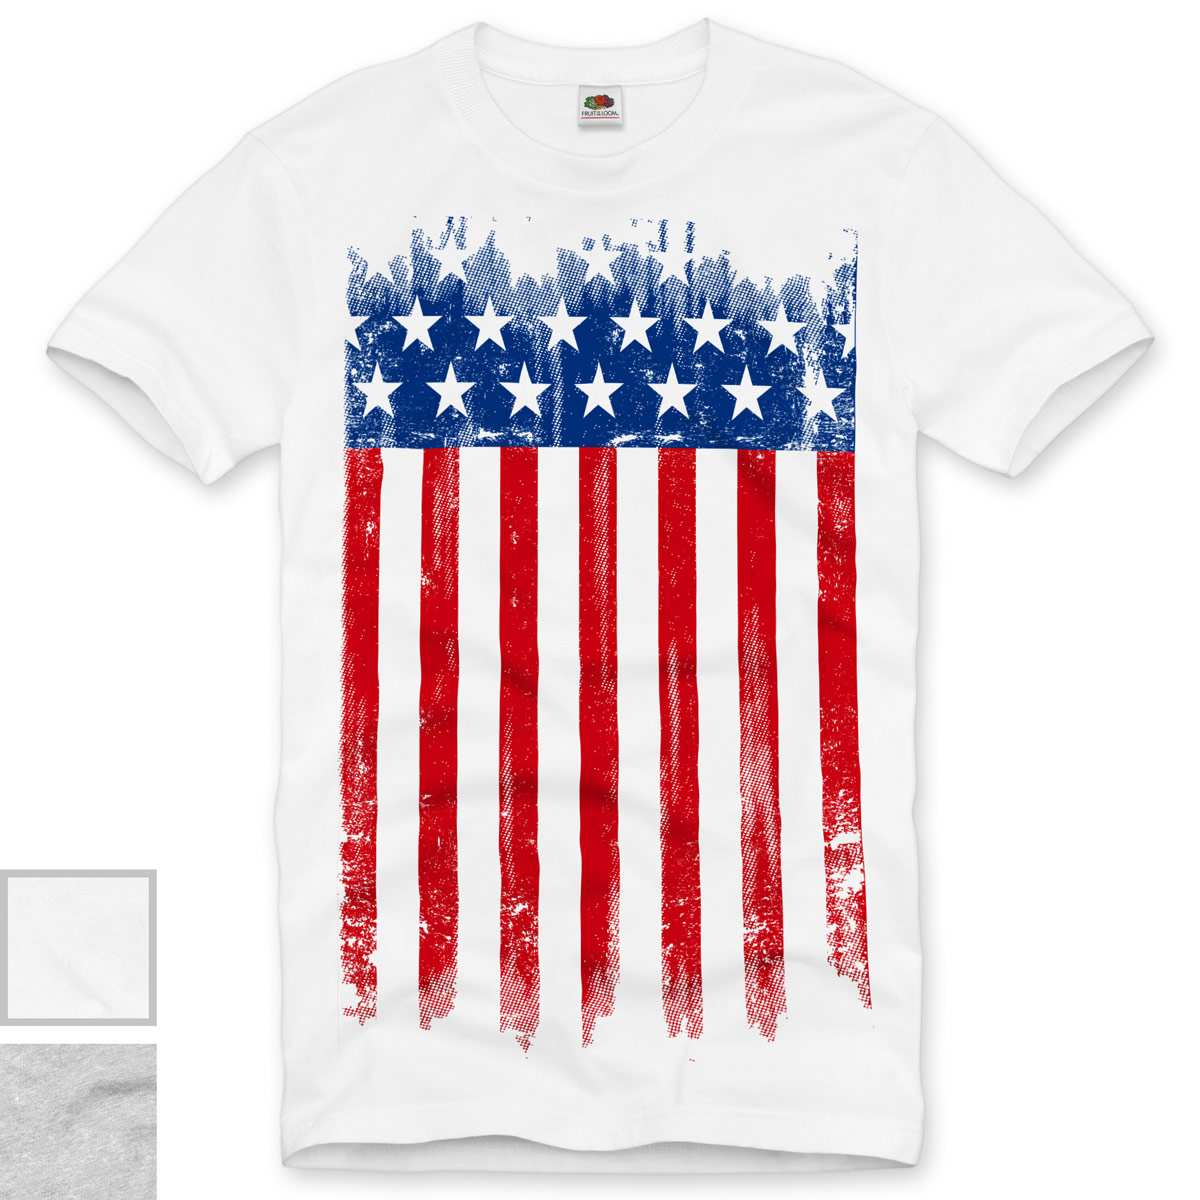 USA T Shirt flagge vereinigte staaten amerika stars stripes S M L XL 